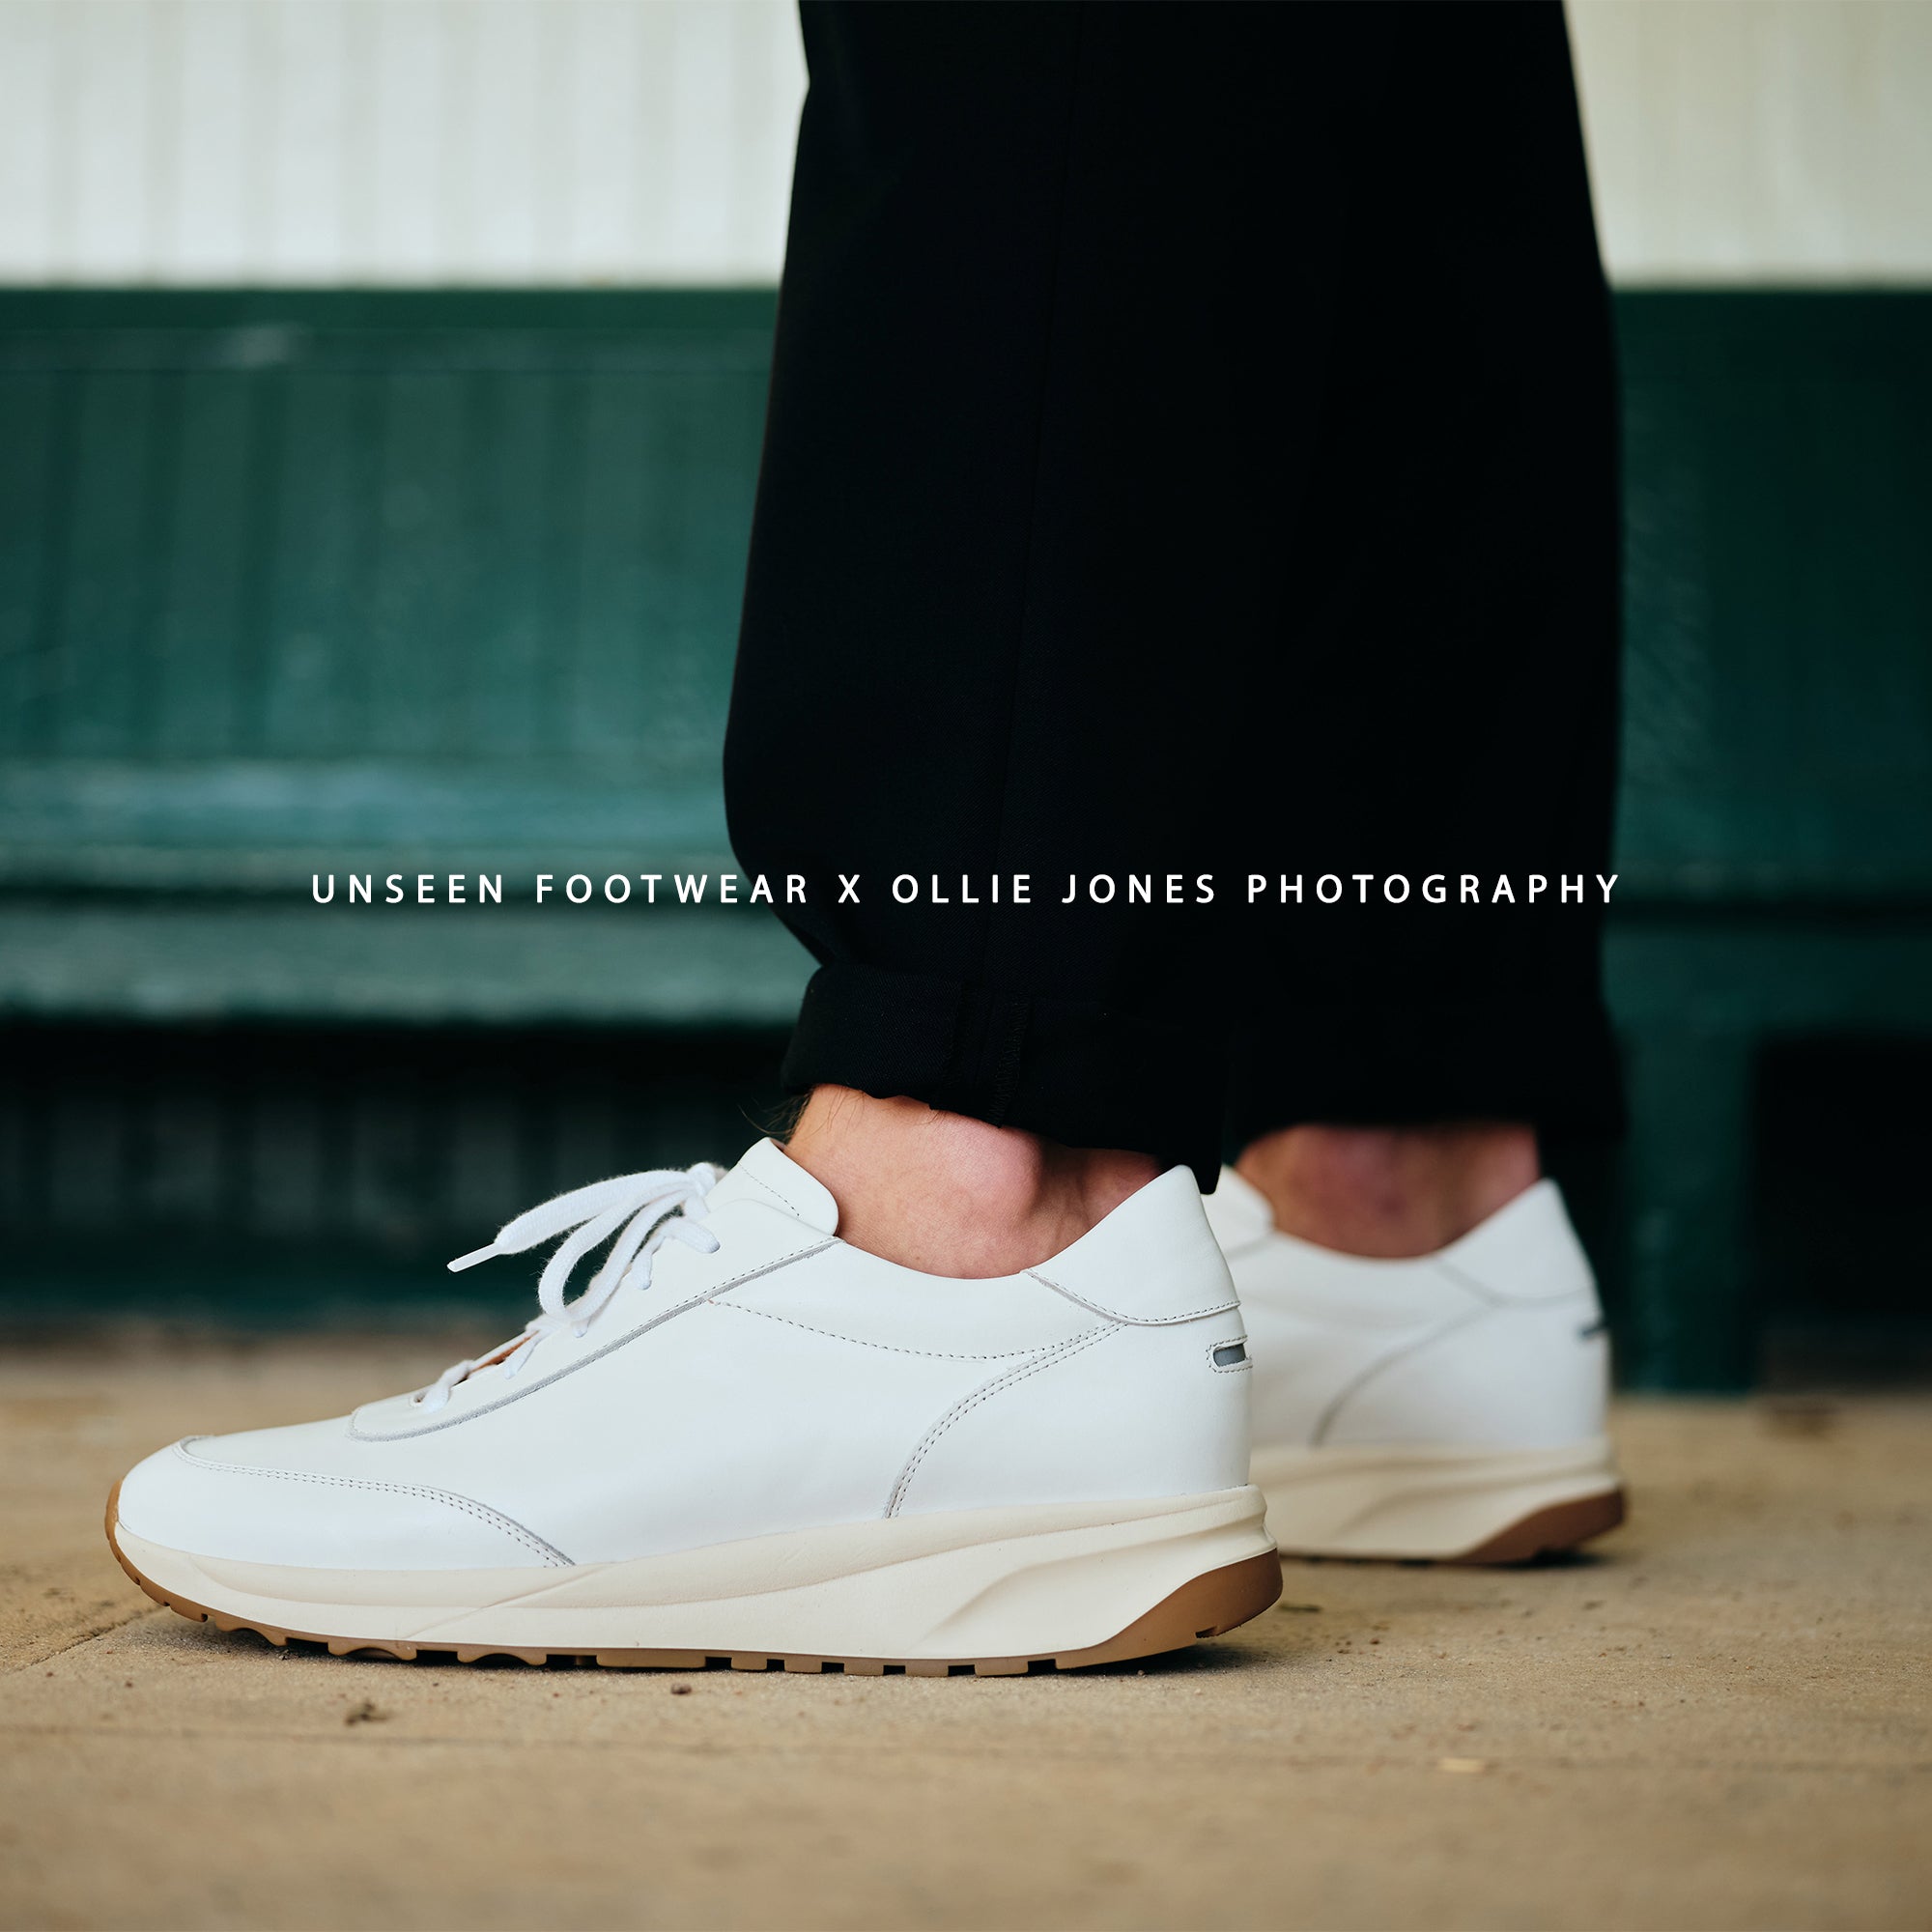 Unseen Footwear x Ollie Jones Photography